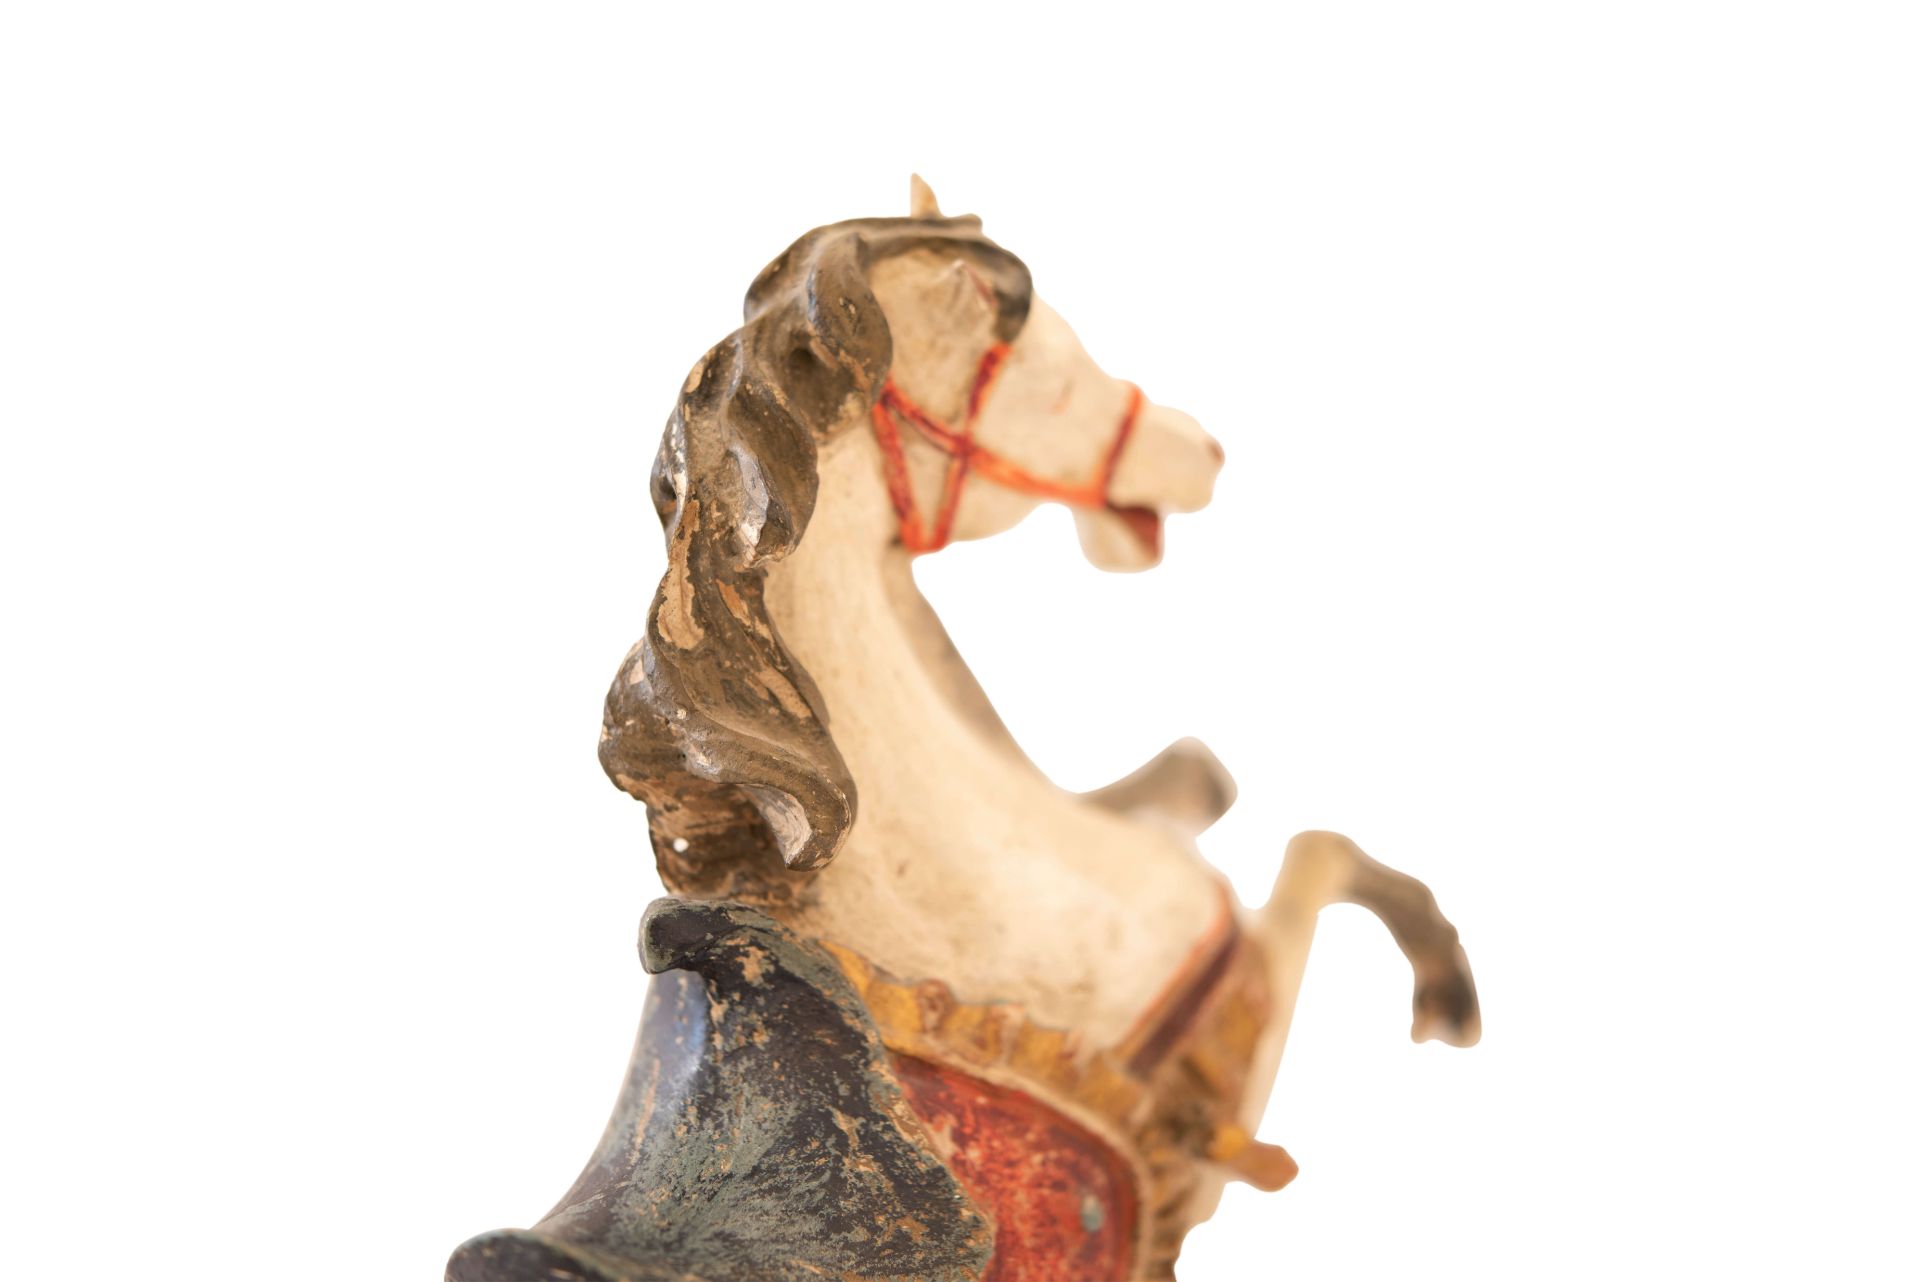 Holzpferd auf Plinthe |Wooden Horse on Plinth - Image 5 of 5